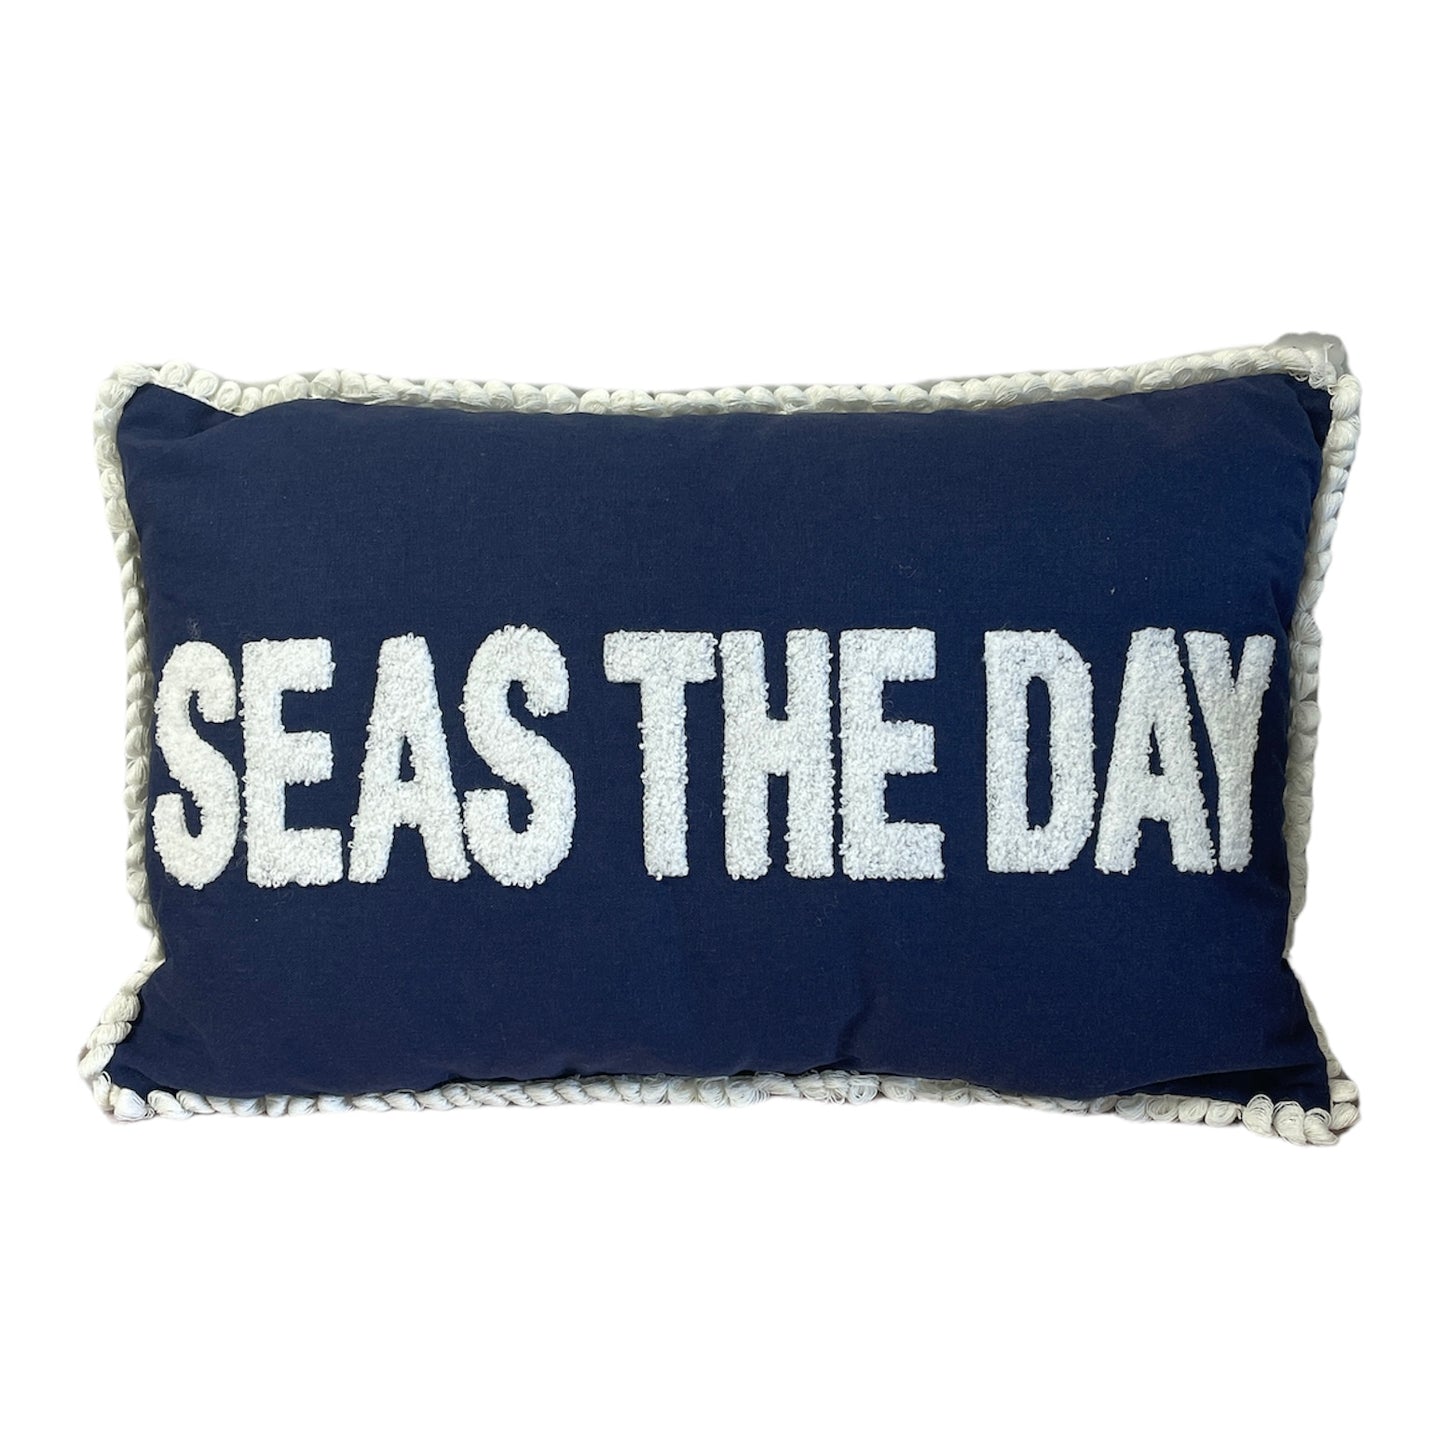 Seas The Day Pillow